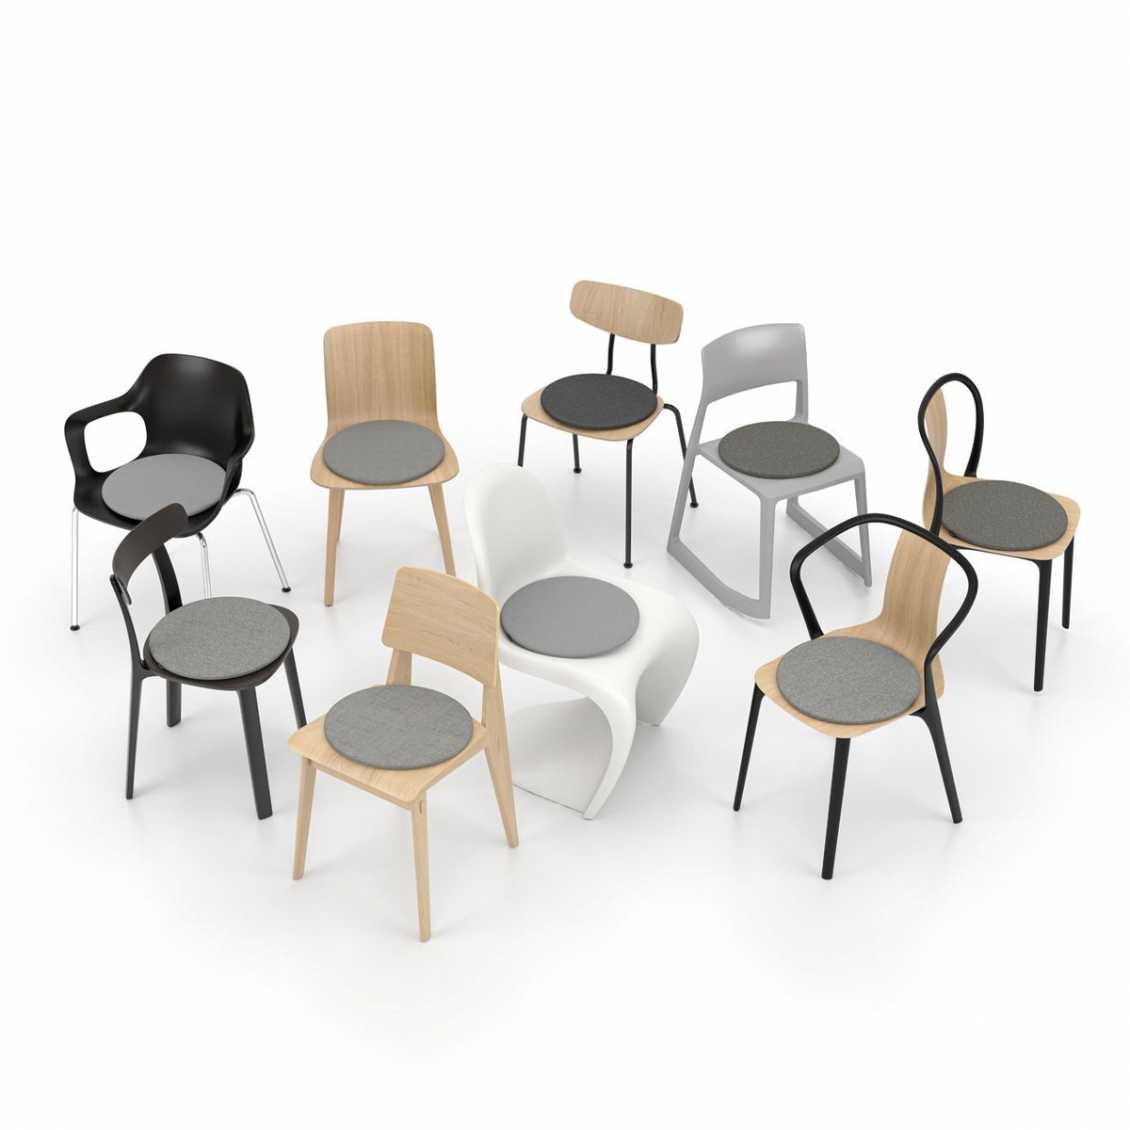 https://www.fundesign.nl/media/catalog/product/6/1/6140447_soft-seats-type-c_-matching-chairs_v_fullbleed_1440x_3.jpg